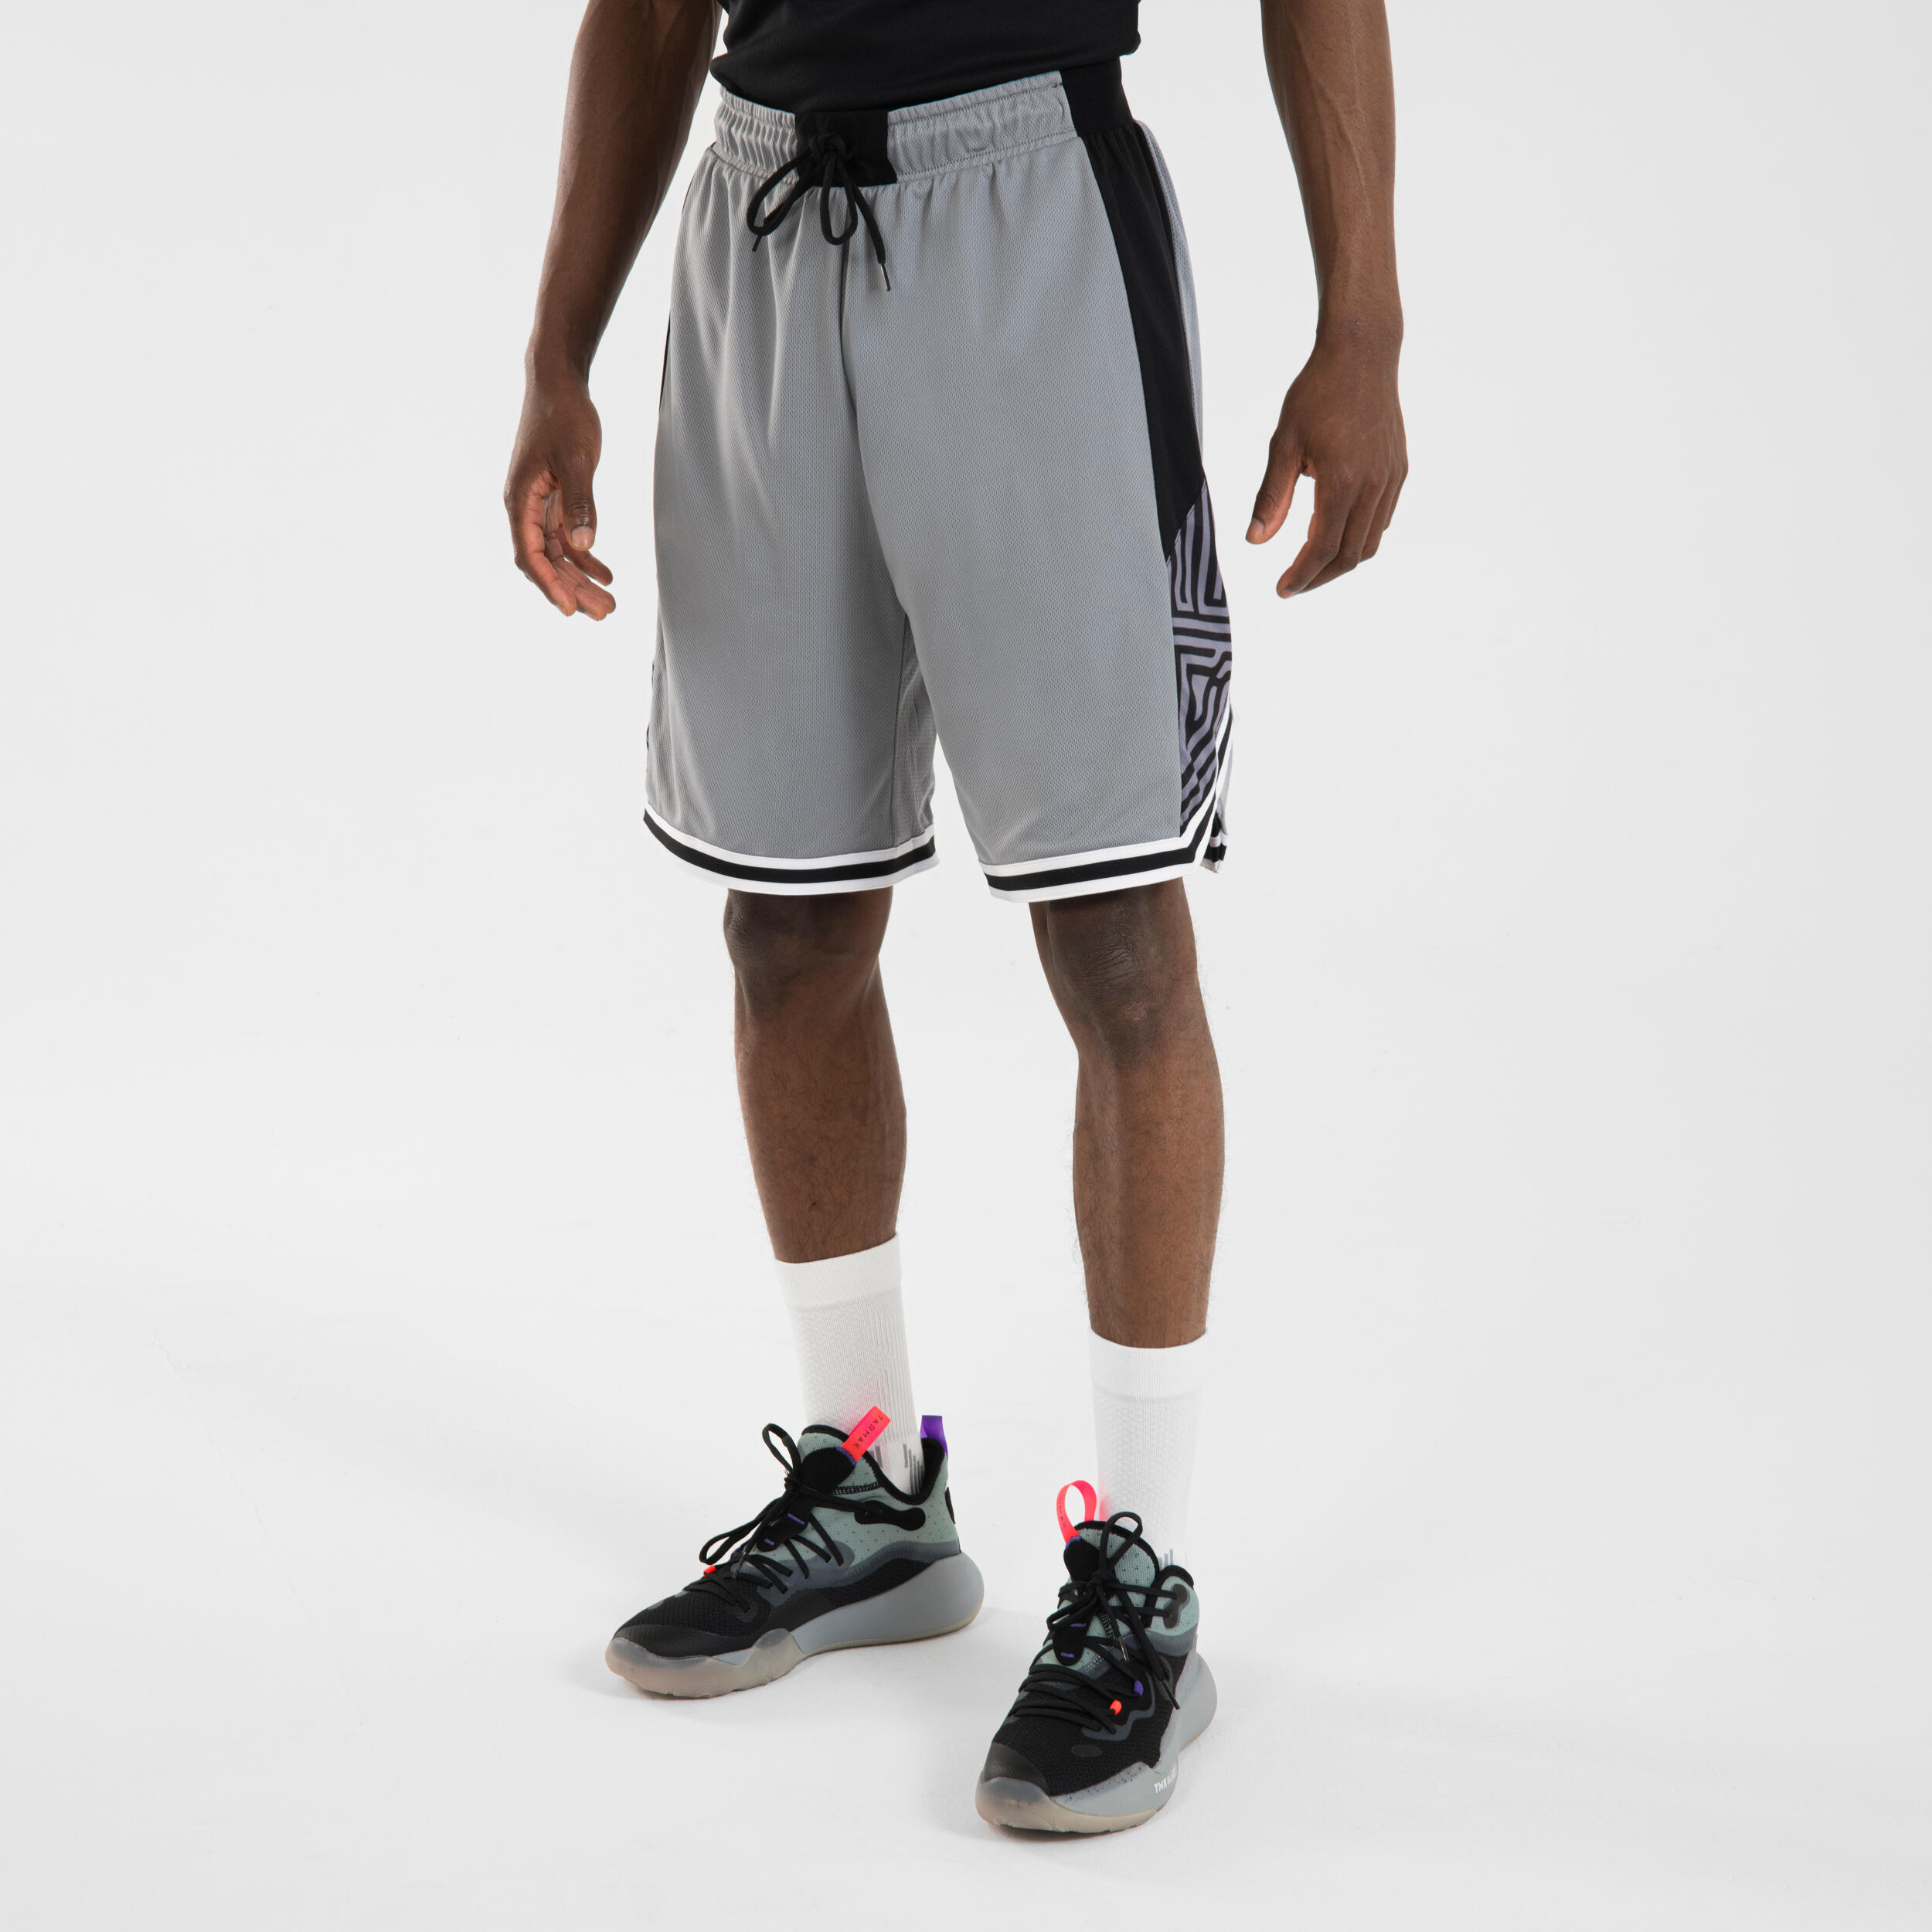 Men Reversible Basketball Shorts SH500R Grey Black